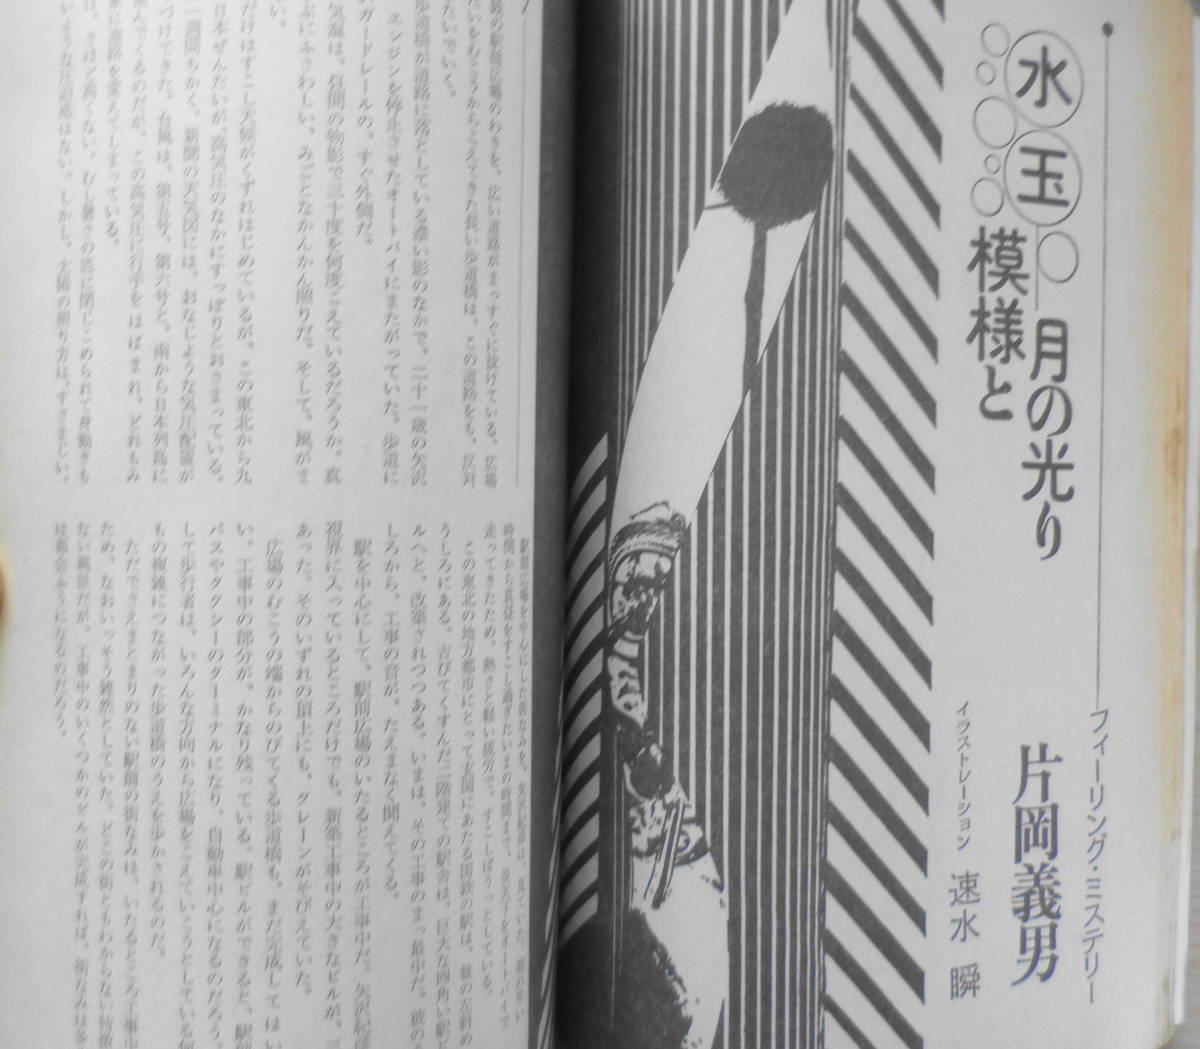  Lupin mystery integrated magazine Showa era 56 year No.3 summer number virtue interval bookstore polka dot pattern . month. light ./ Kataoka Yoshio g